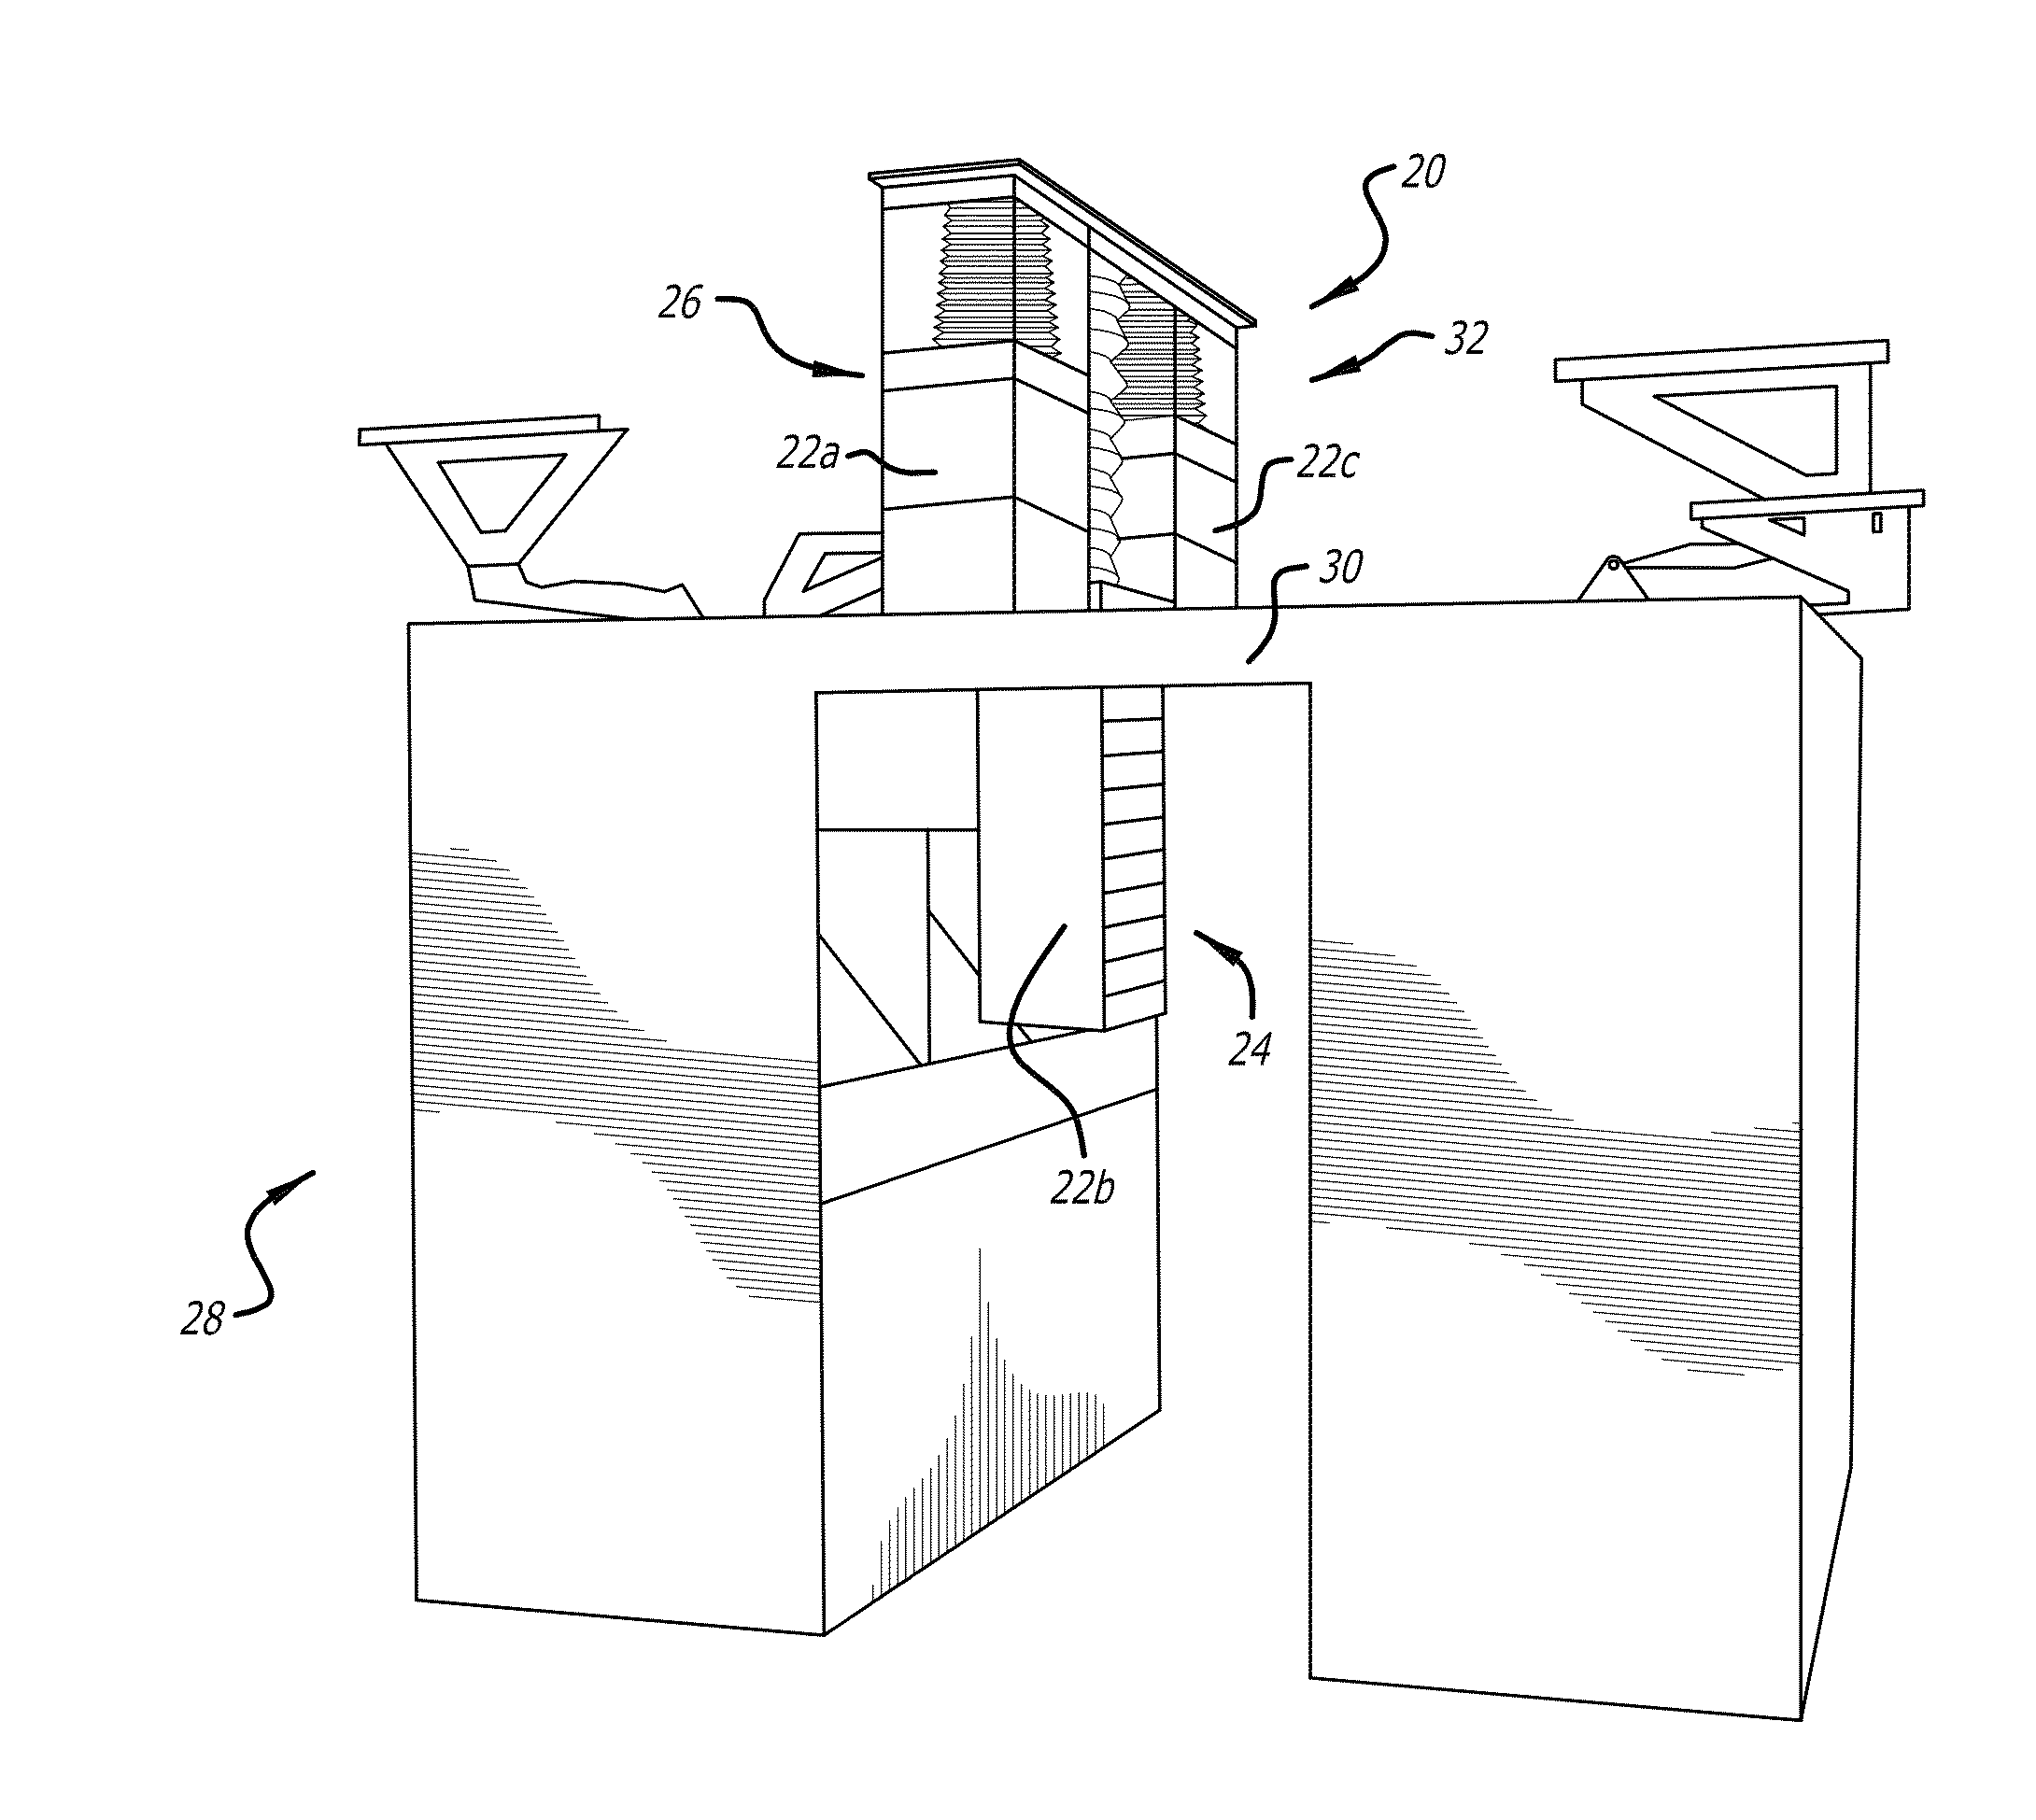 Vacuum powered lifting mechanism